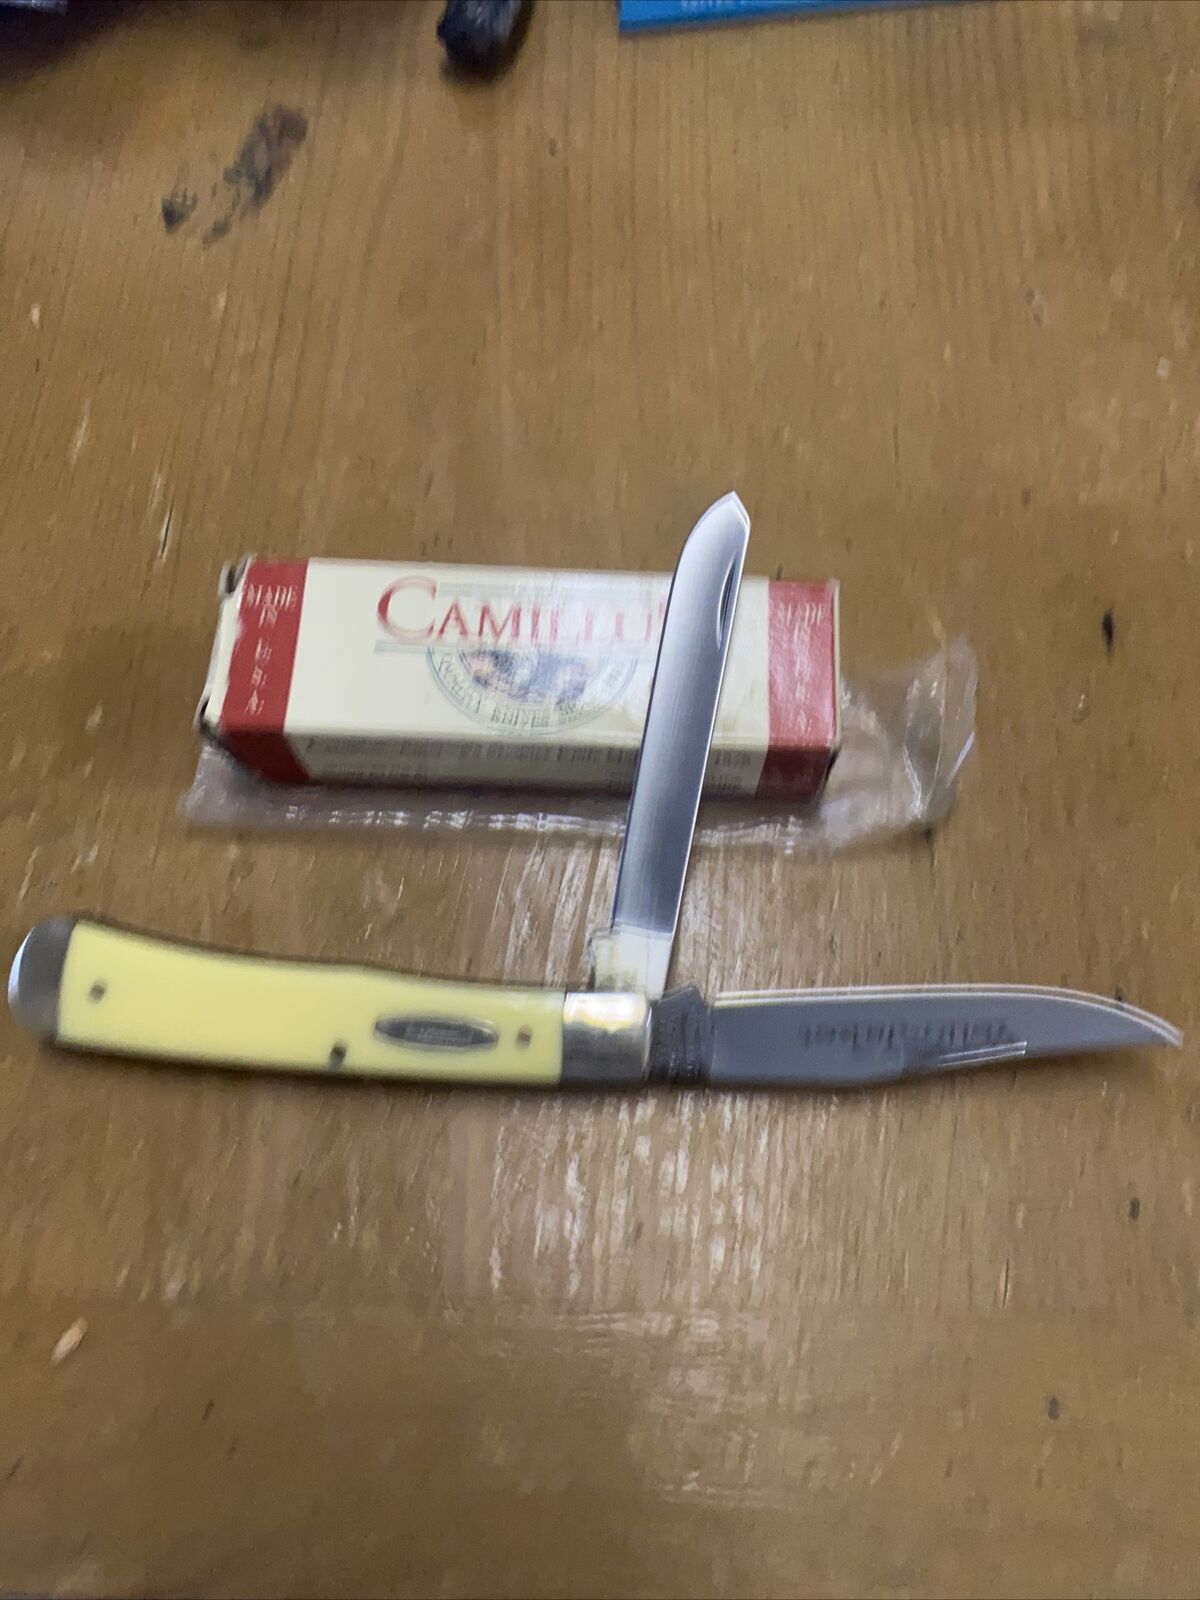 RARE/DISCONTINUED Camillus Yello-Jacket  717 Large  Folding Trapper Knife, USA